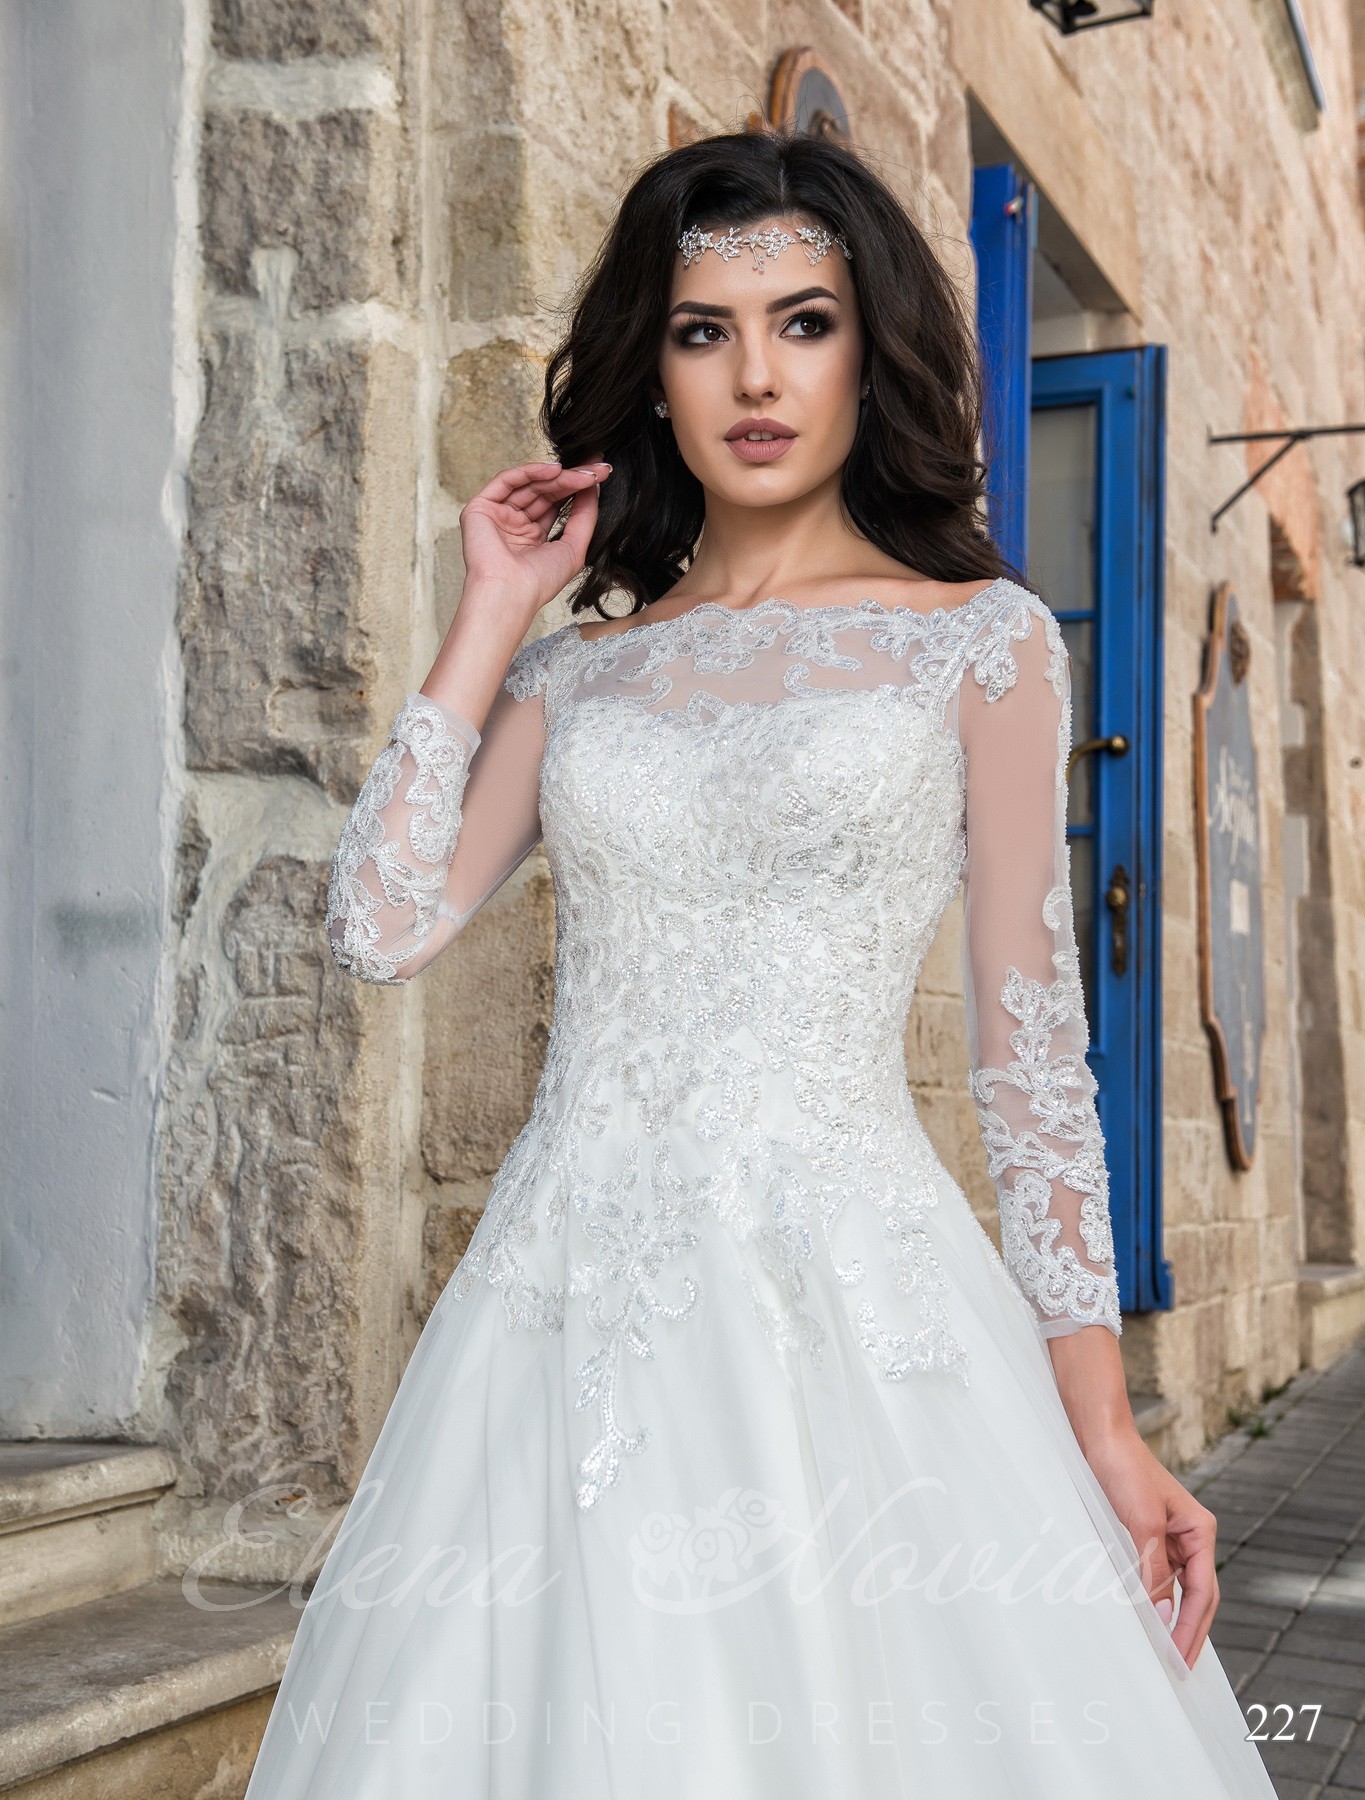 Wedding dress with a false decolette model 227